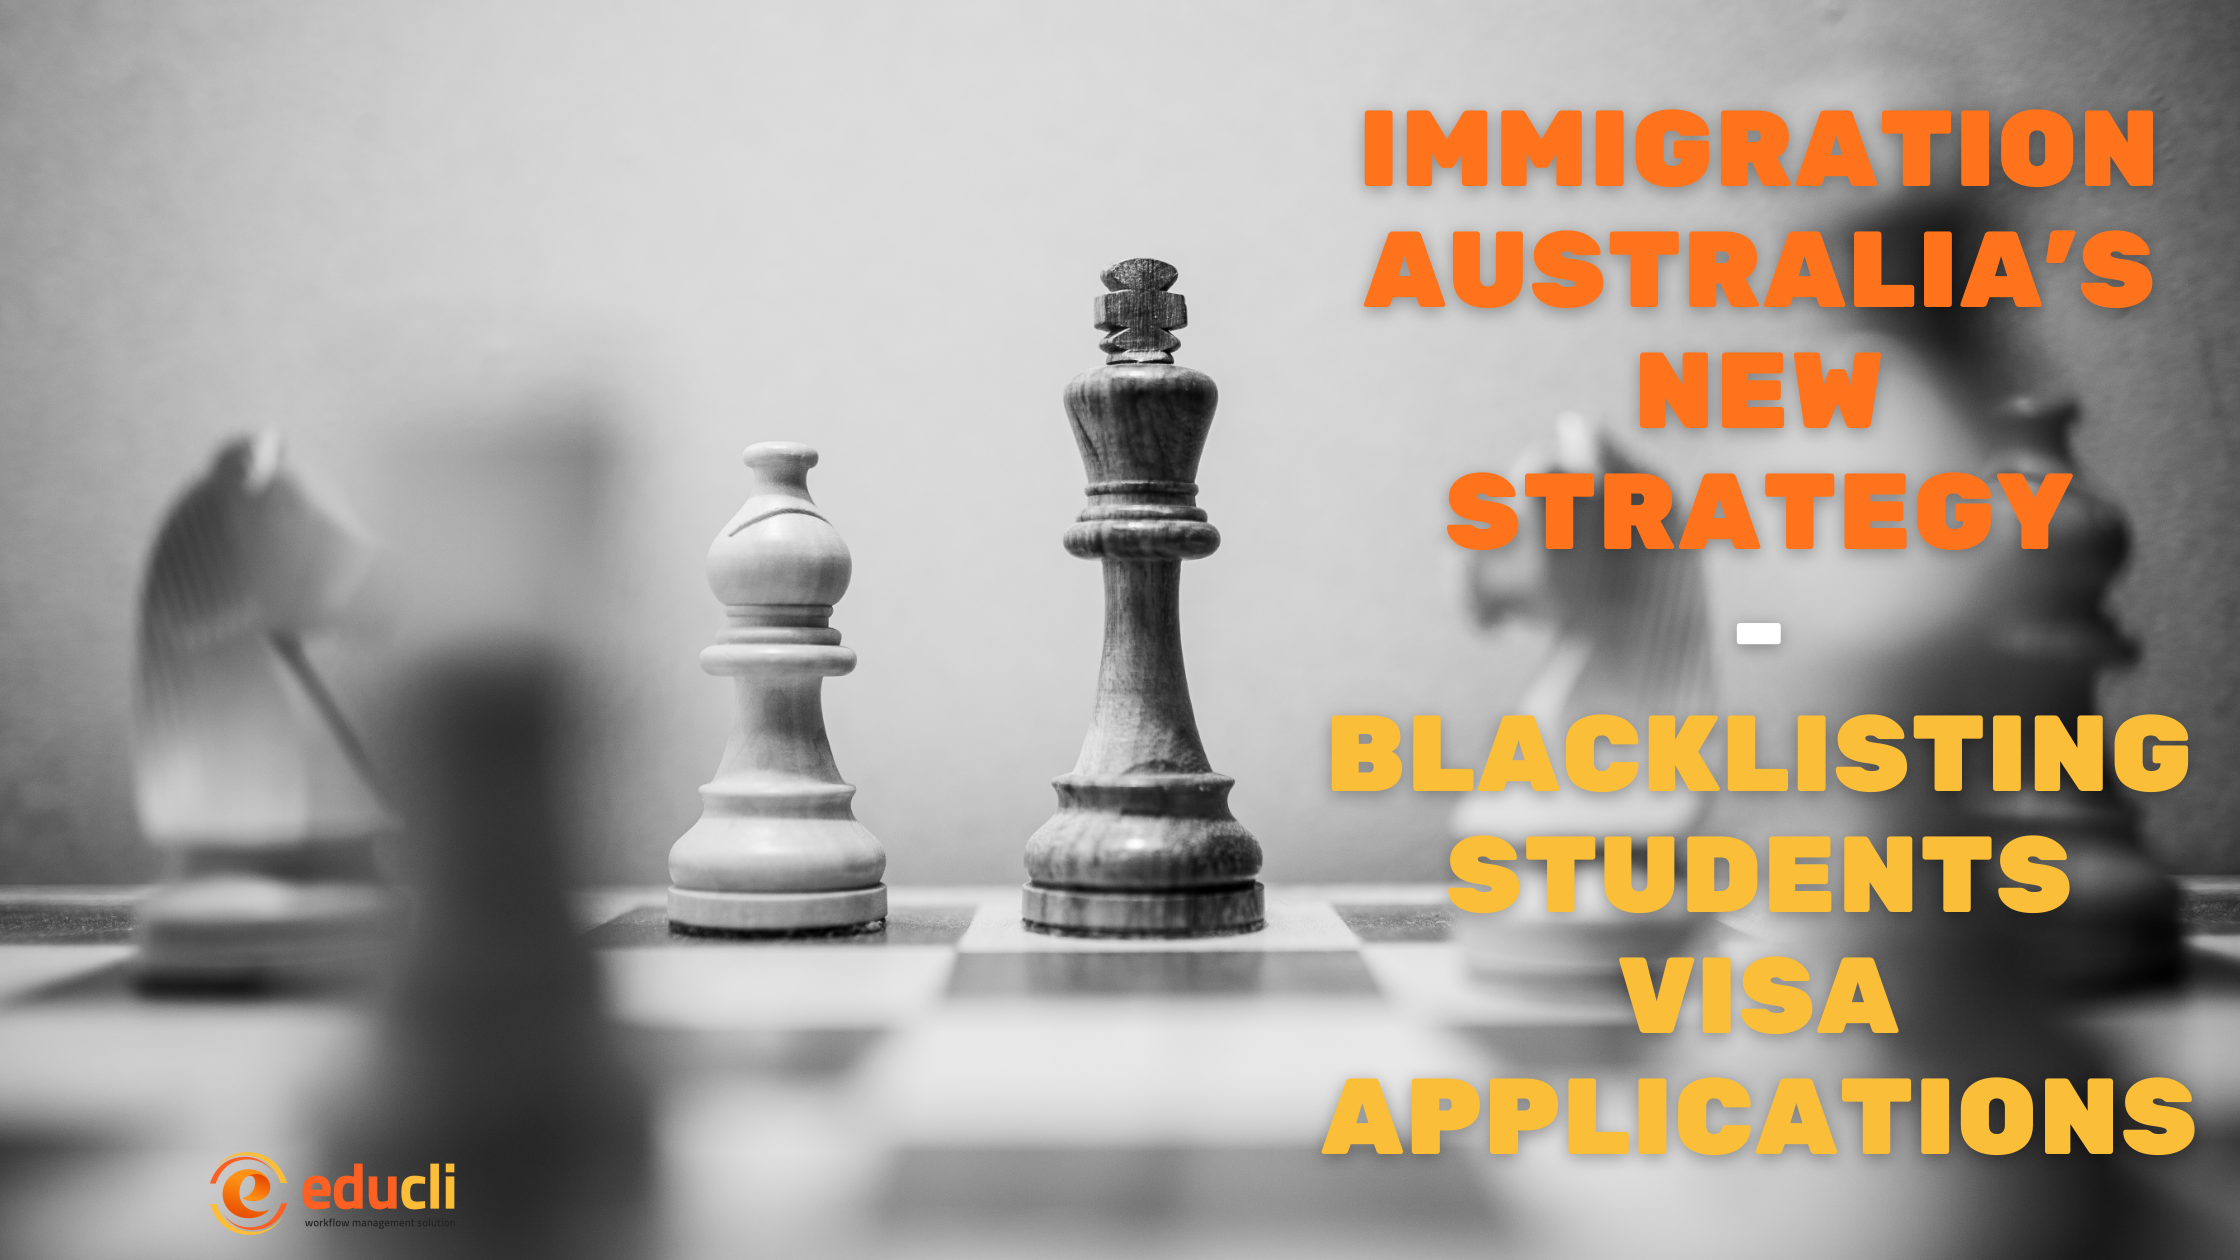 Immigration Australia's New Strategy Blacklisting Students Visa Applications